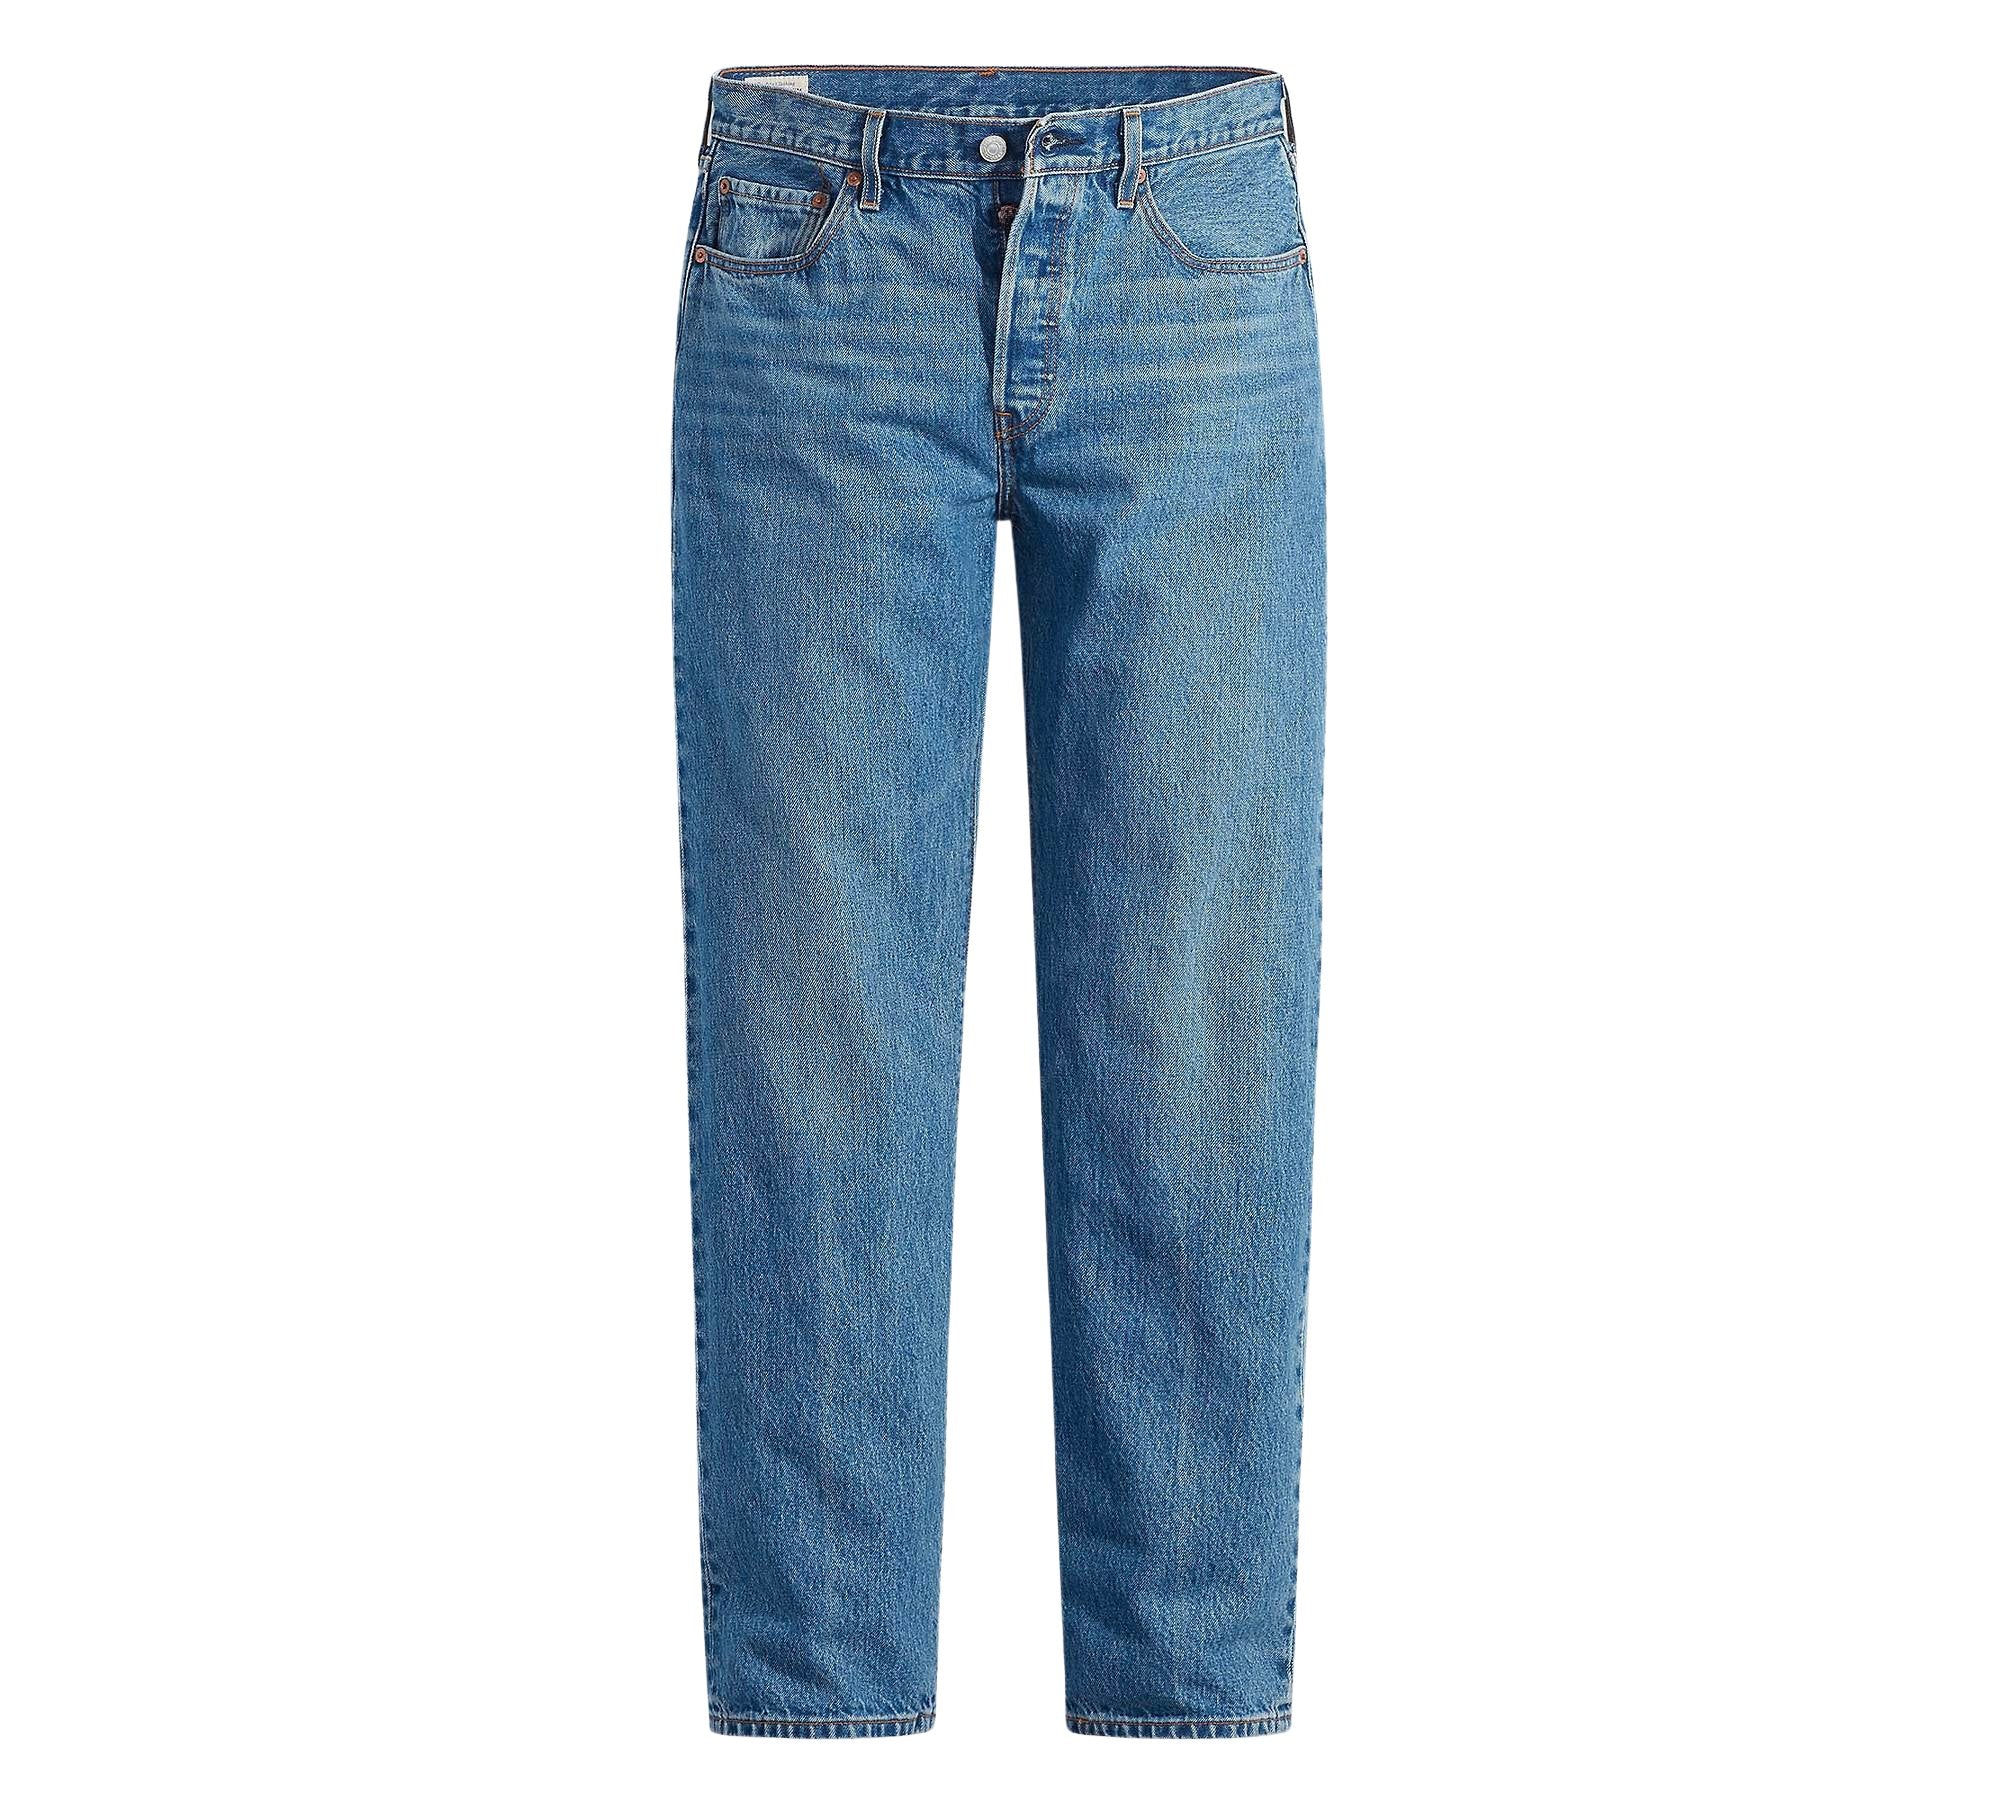 4 Pack - Vintage LEVI'S Classic Blue Zip Fly Jeans - Waist 32 - Length 32 - Vintage Superstore Online